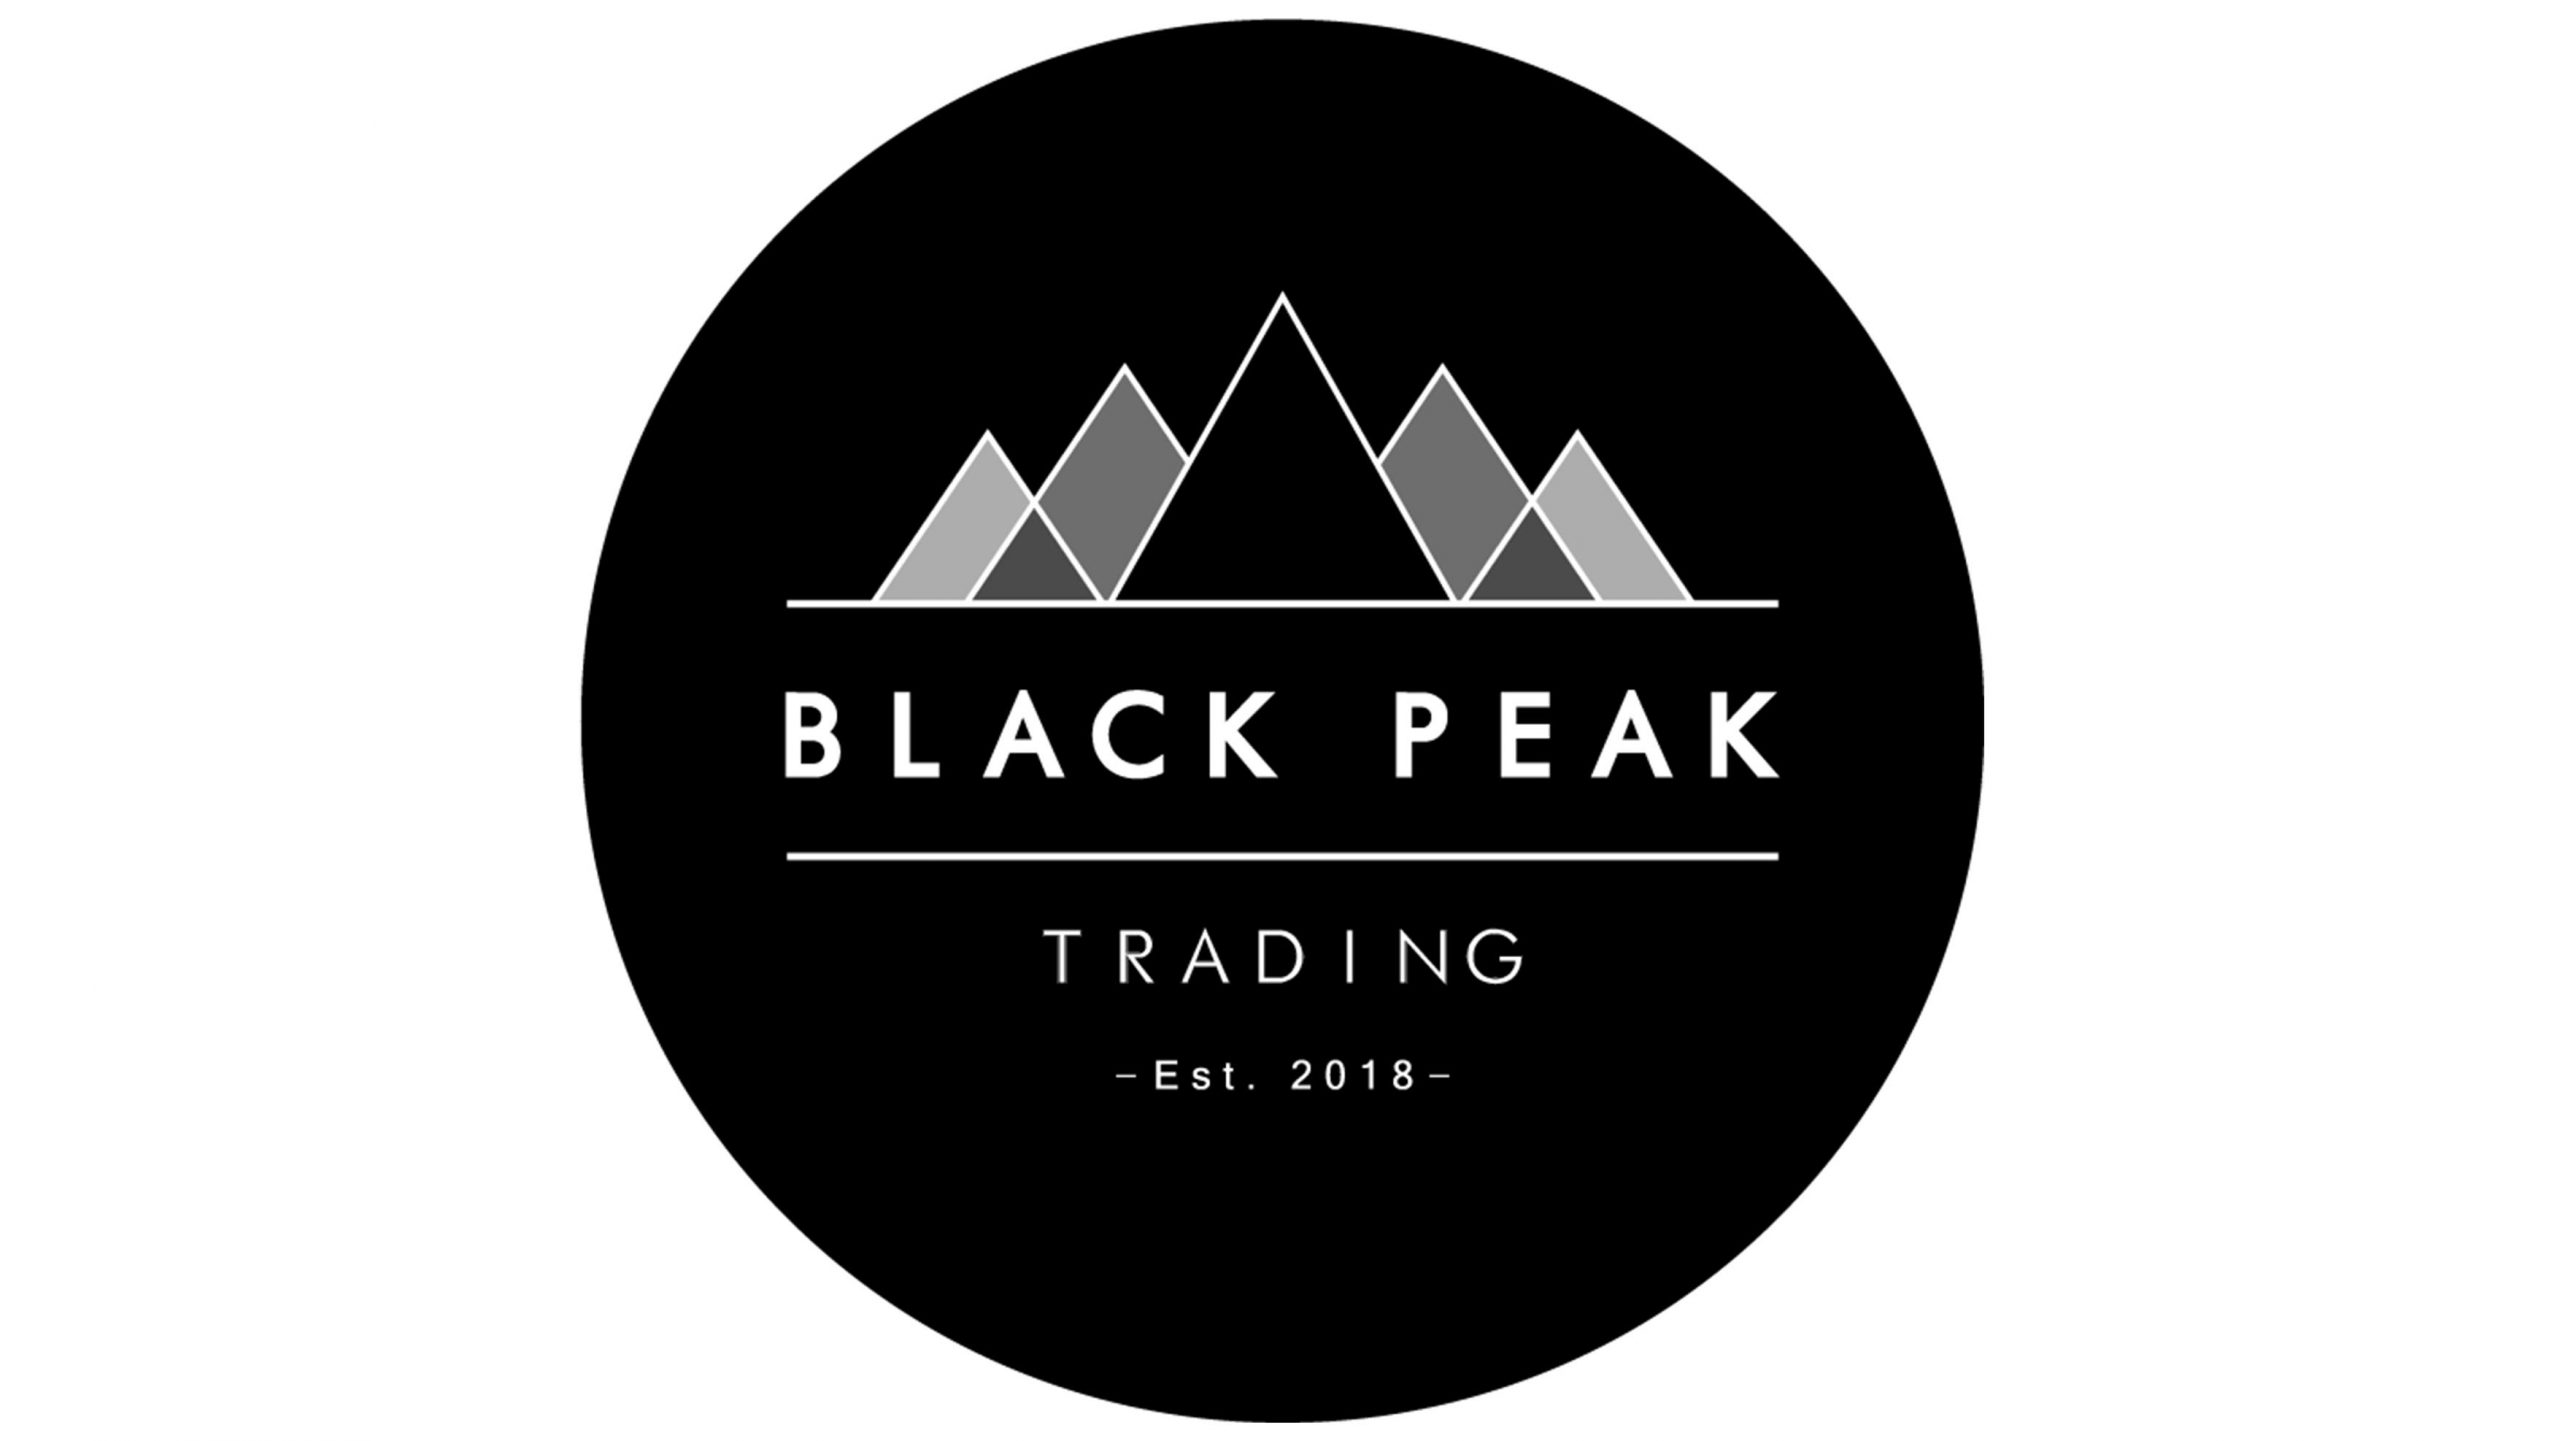 Black Peak Trading